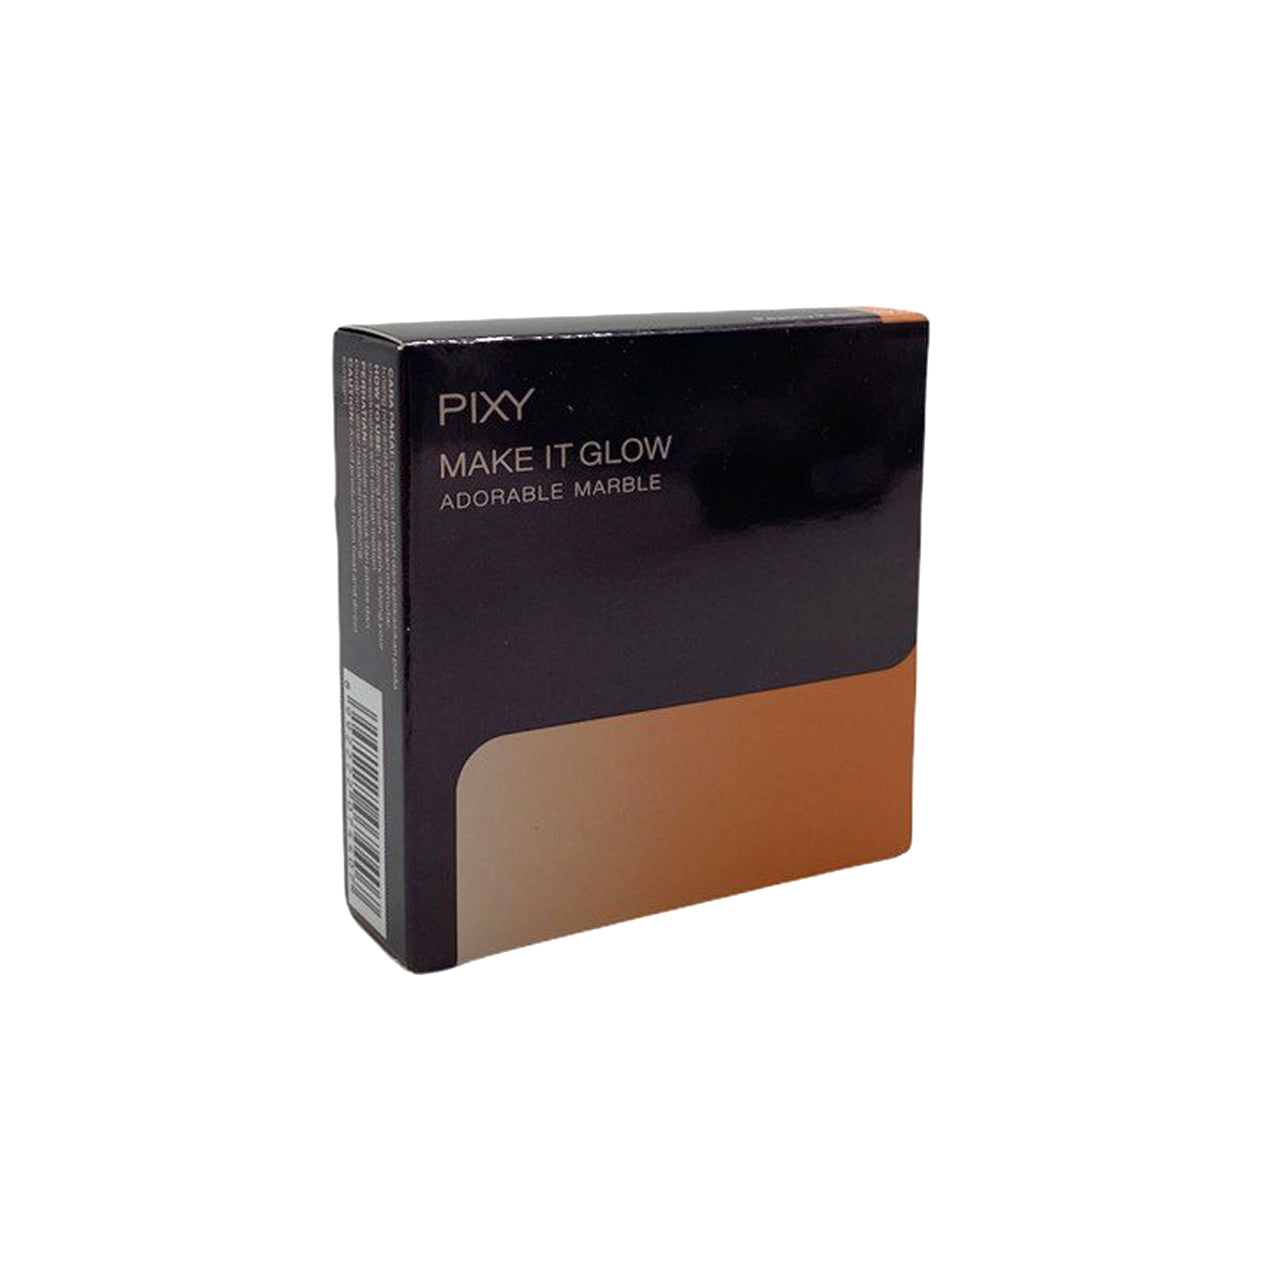 Pixy, Make it Glow, Adorable Marble, 01 Brick Terracotta, 7.5 g